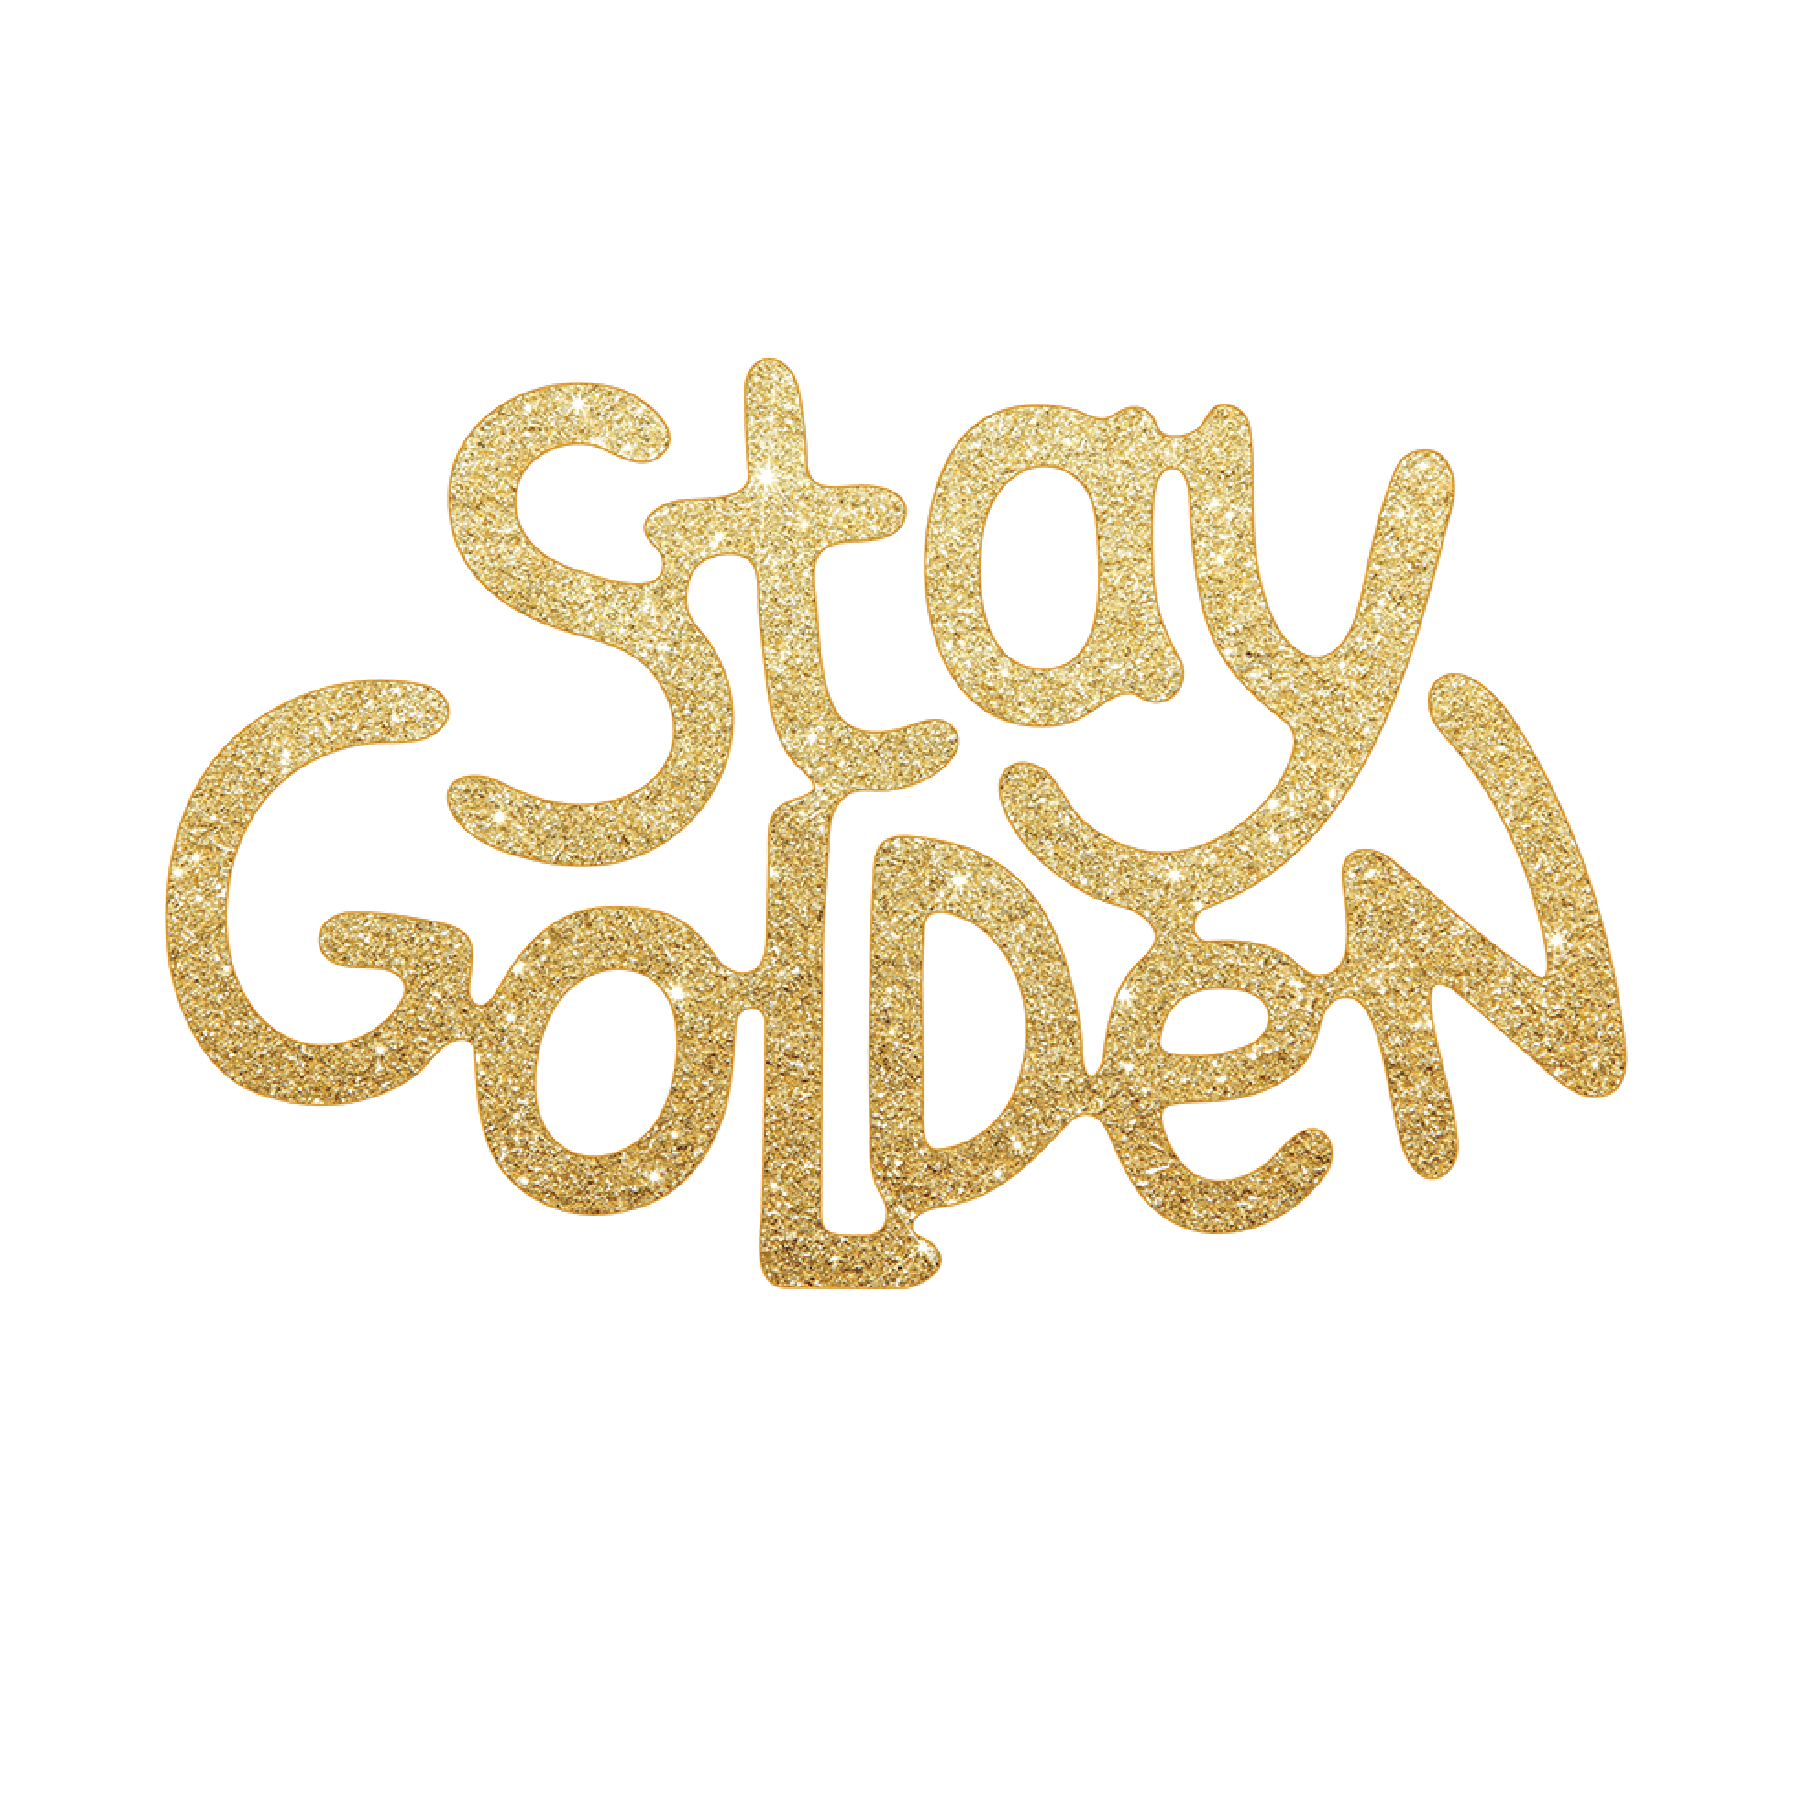 Stay Golden